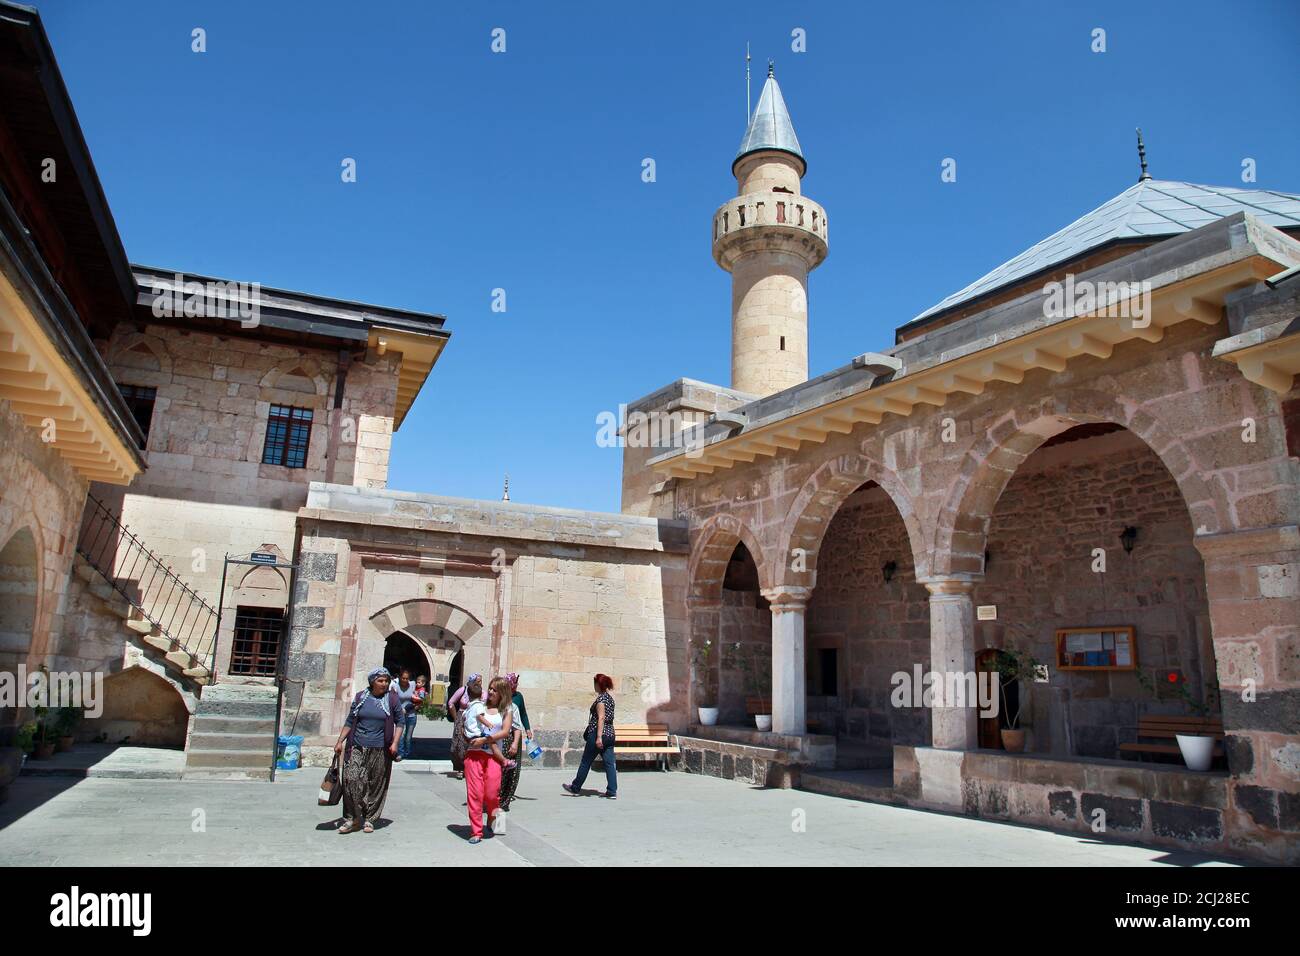 HACI BEKTAS, TURKEY - AUGUST 25: People visiting at famous mosque of Haci Bektas Veli on August 25, 2013 in Nevsehir, Turkey. Haci Bektas is the founder of the Bektashi order, lived in 14th century. Stock Photo